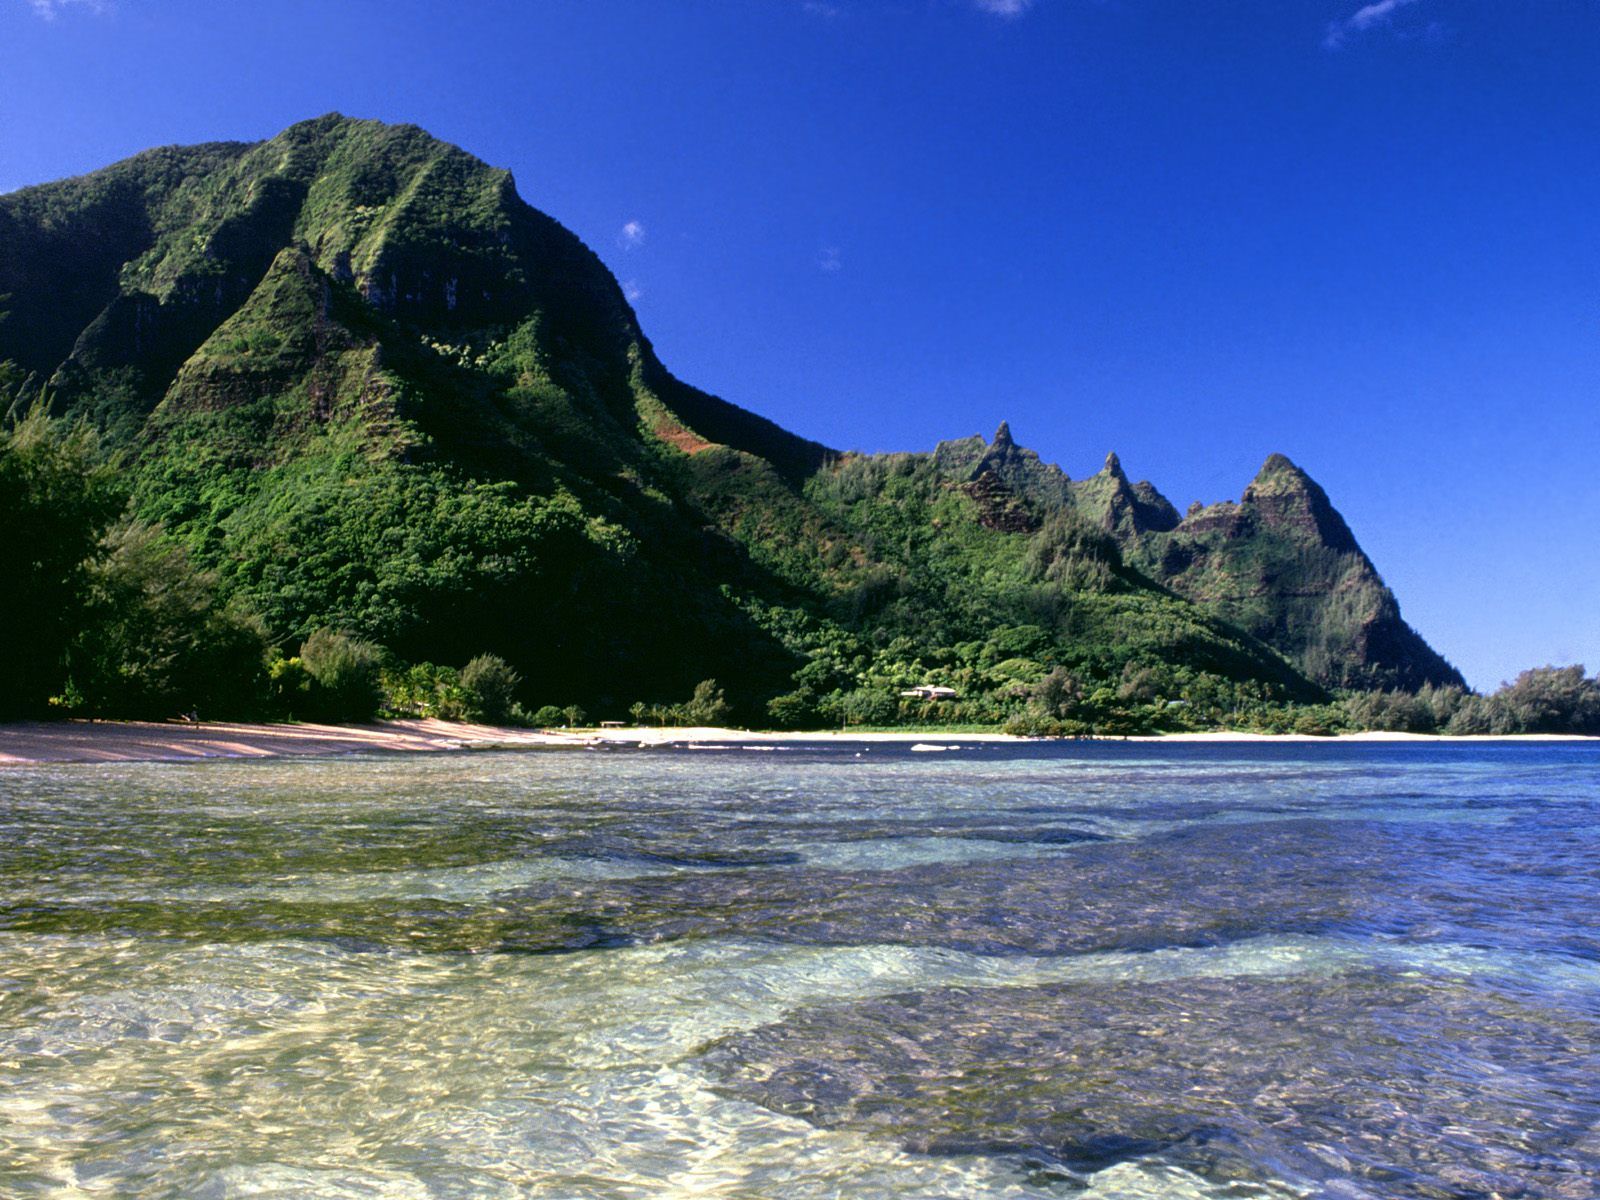 Na Pali Coast, Kauai, Hawaii | Hawaii | Pinterest | Kauai hawaii ...